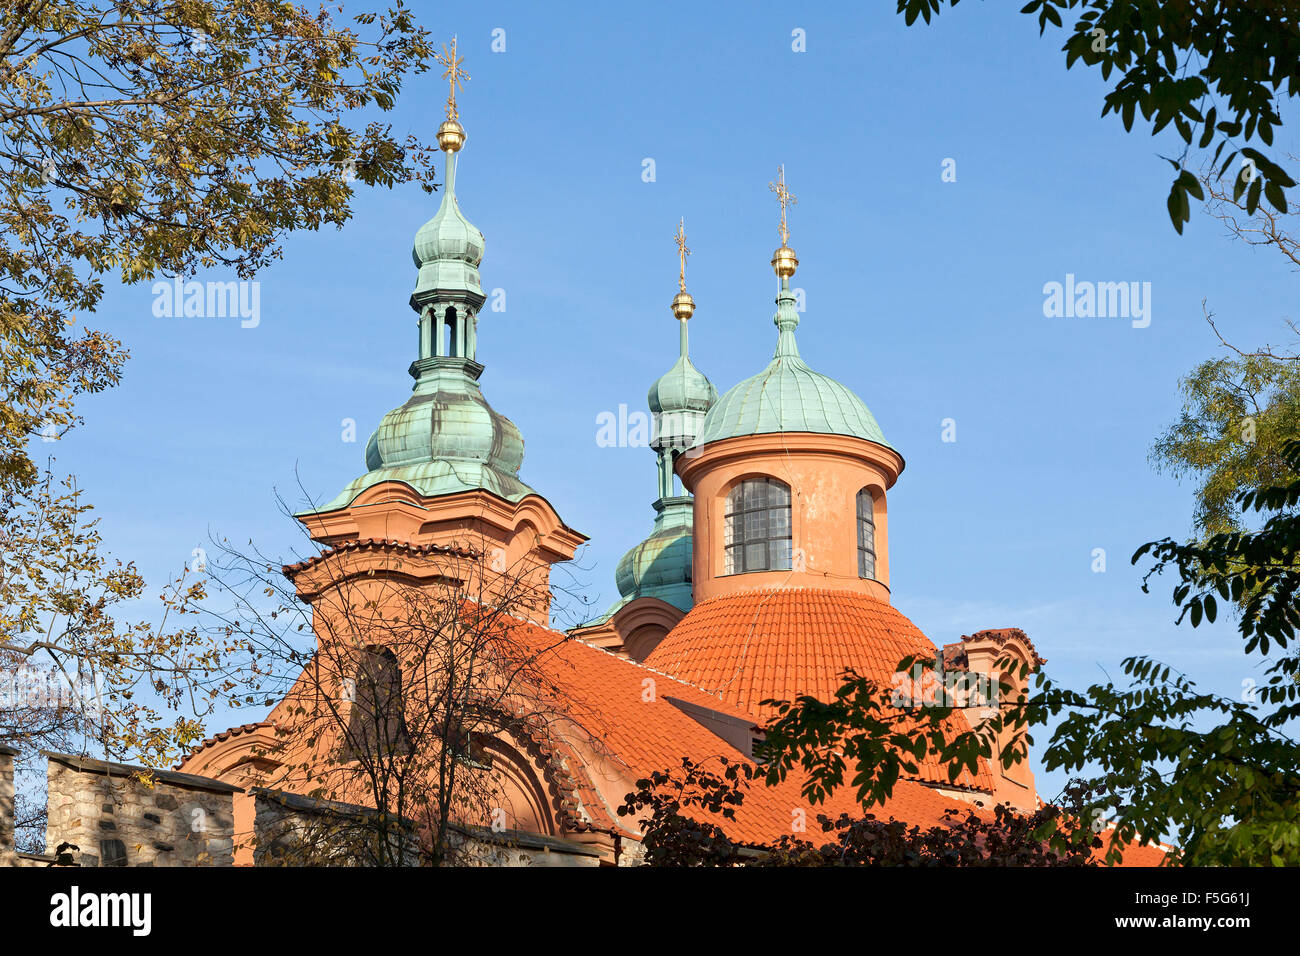 Cathedral of Saint Lawrence, Mount Petřín, Prague, Czech Republic Stock Photo